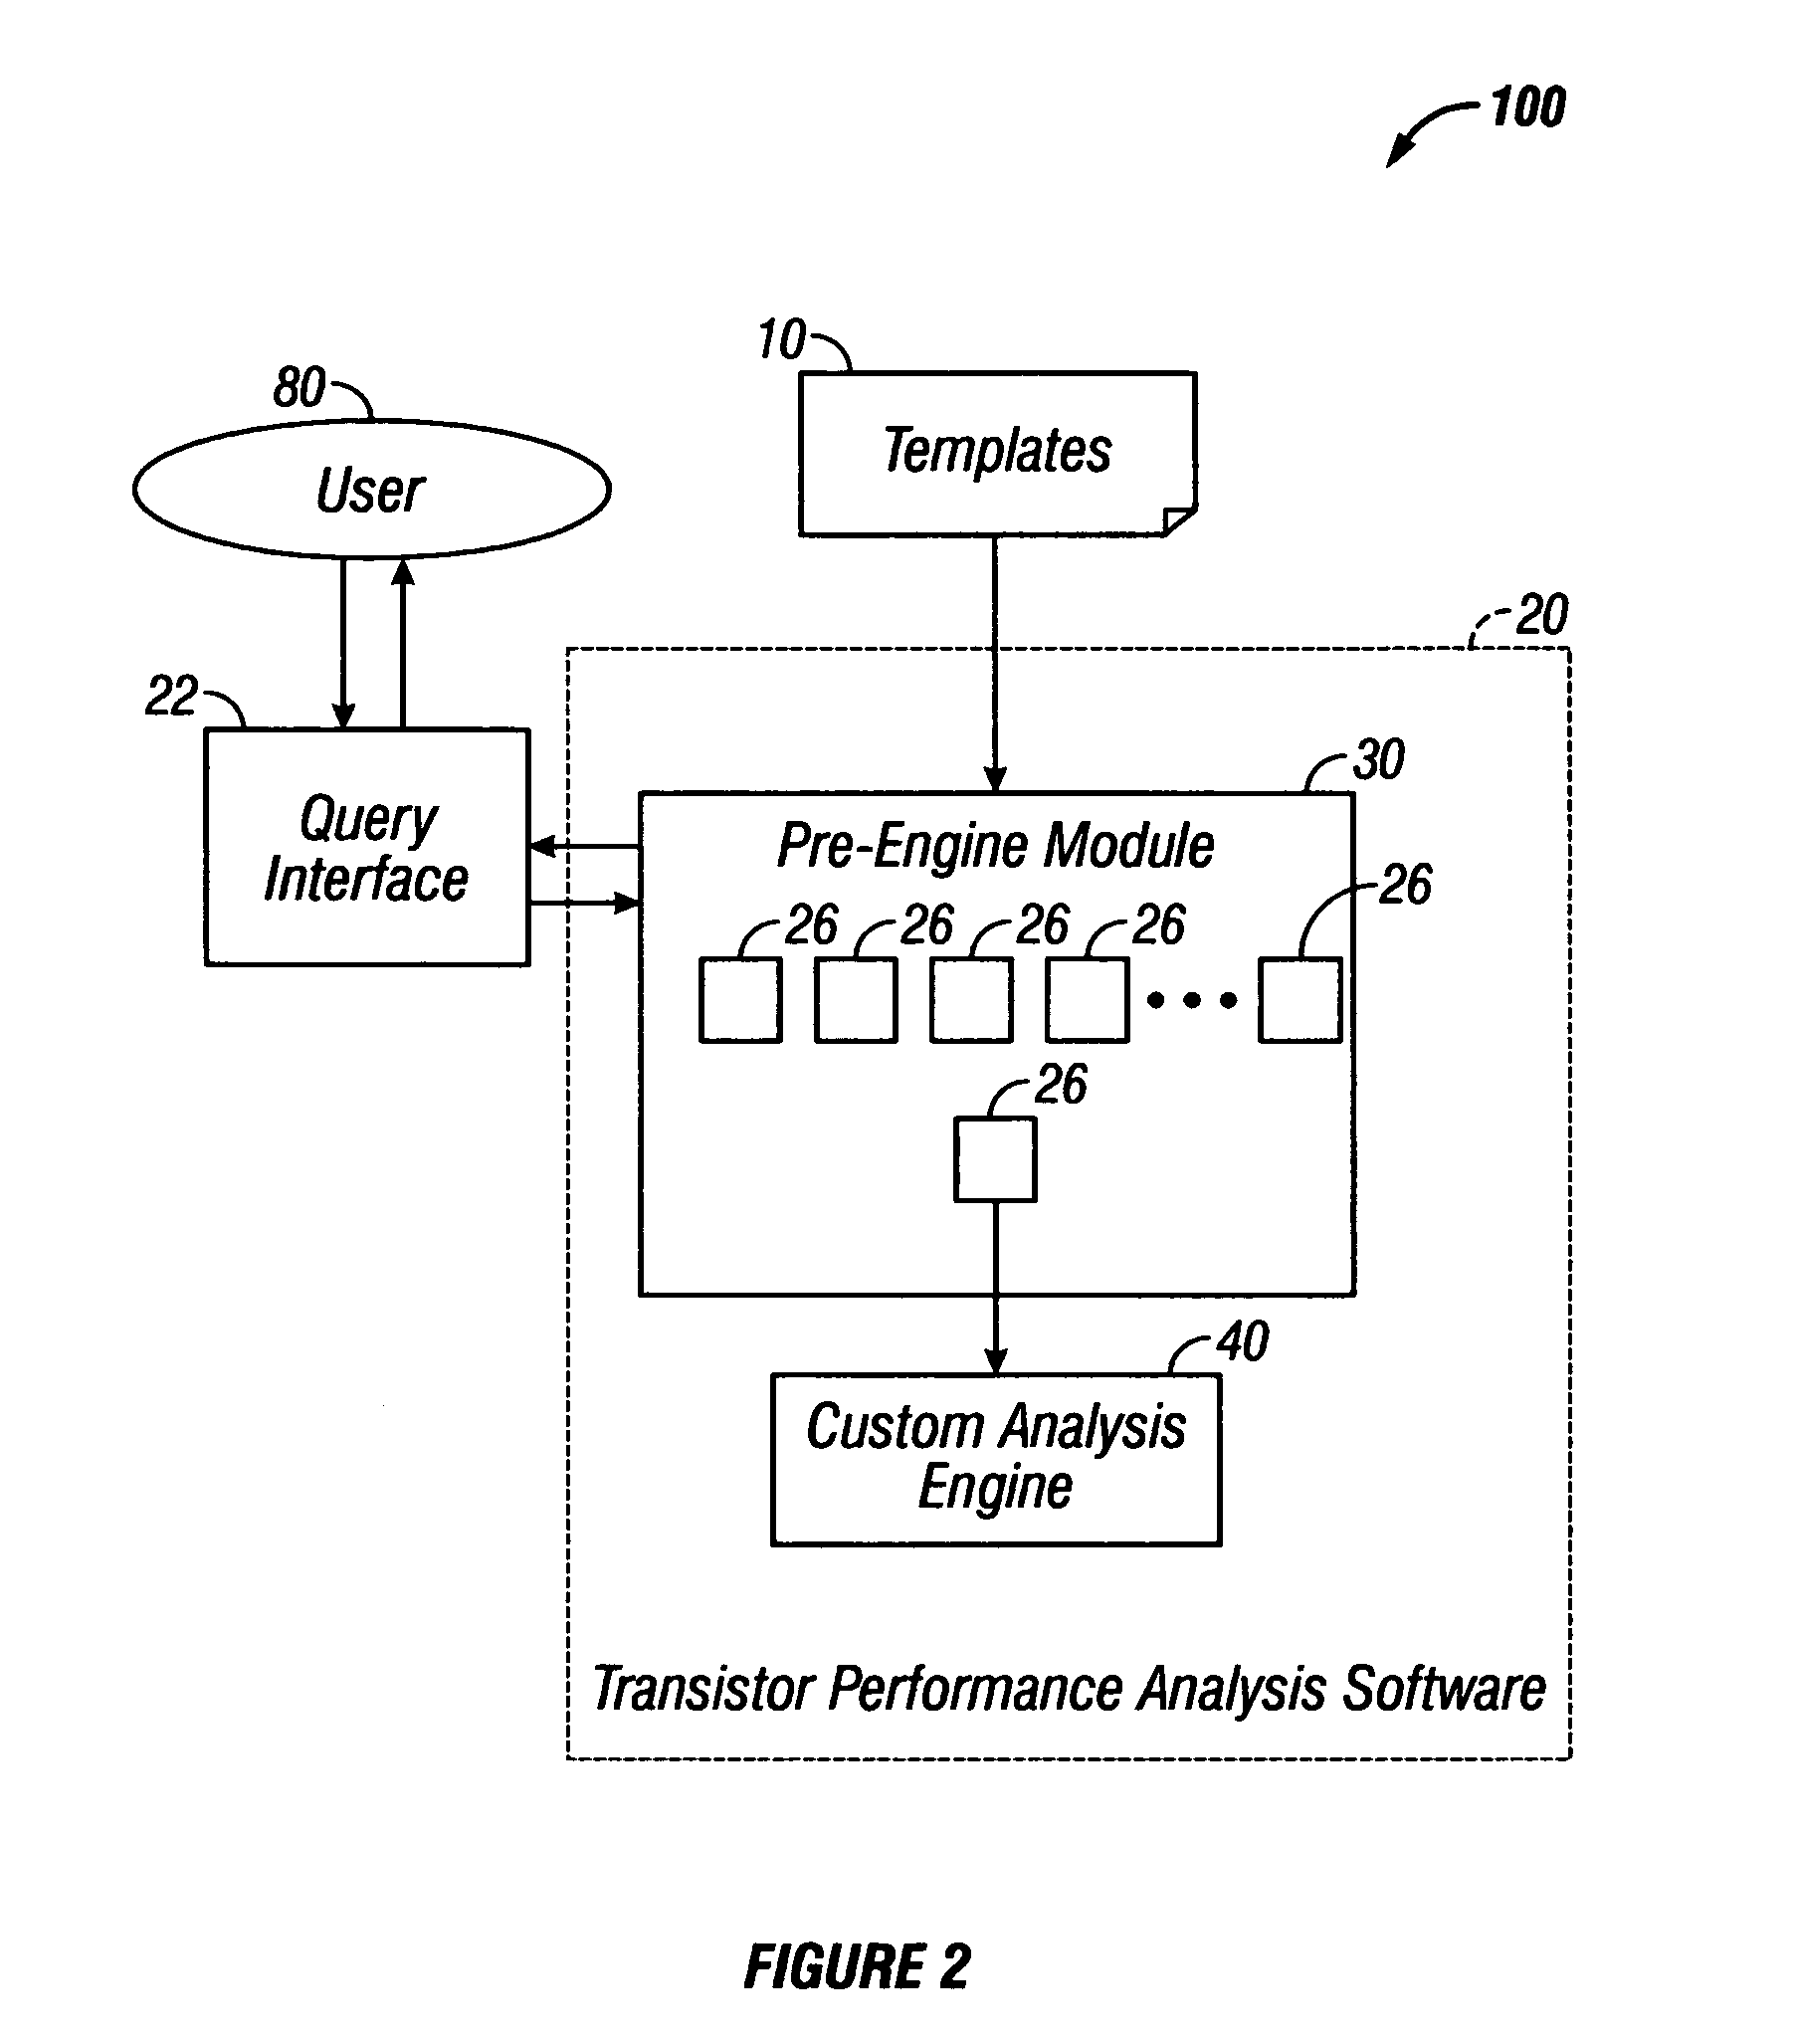 Transistor performance analysis system